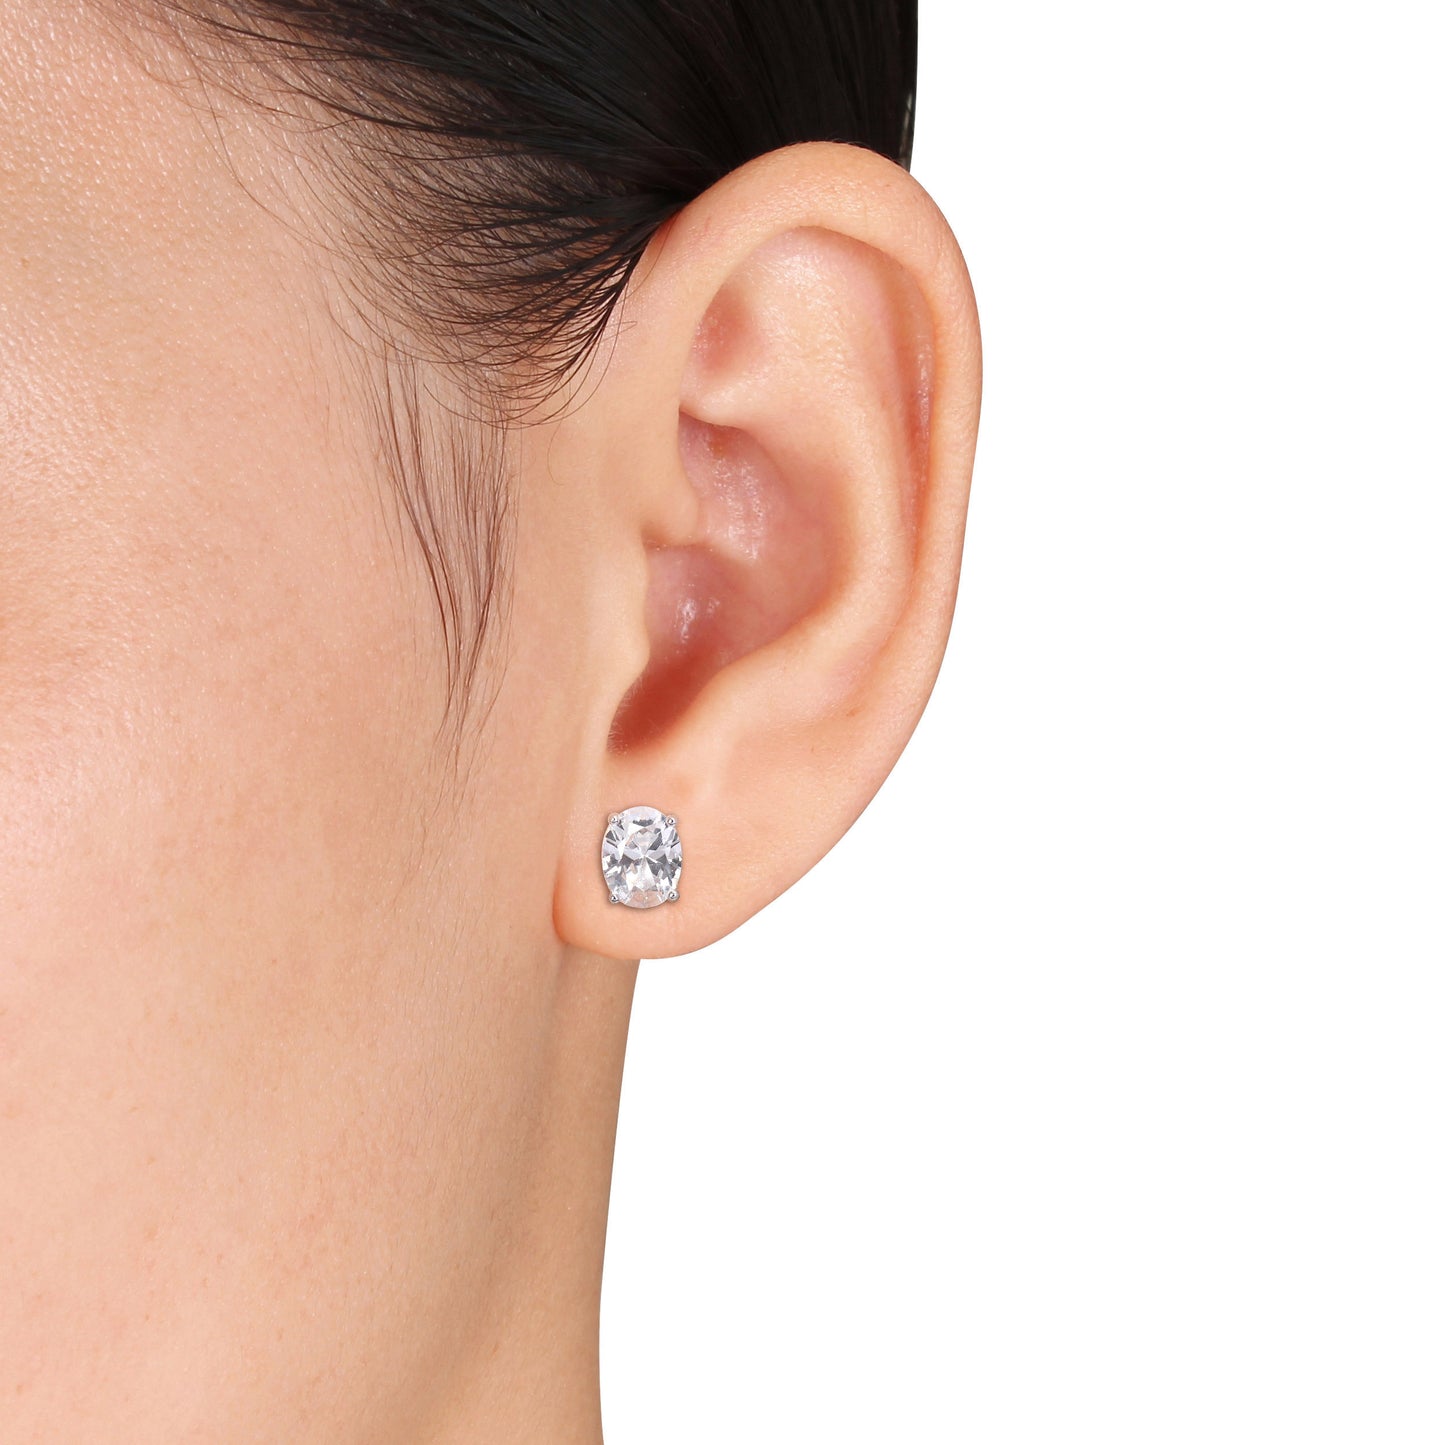 5 7/8 ct TGW Created white sapphire fashion post earrings silver